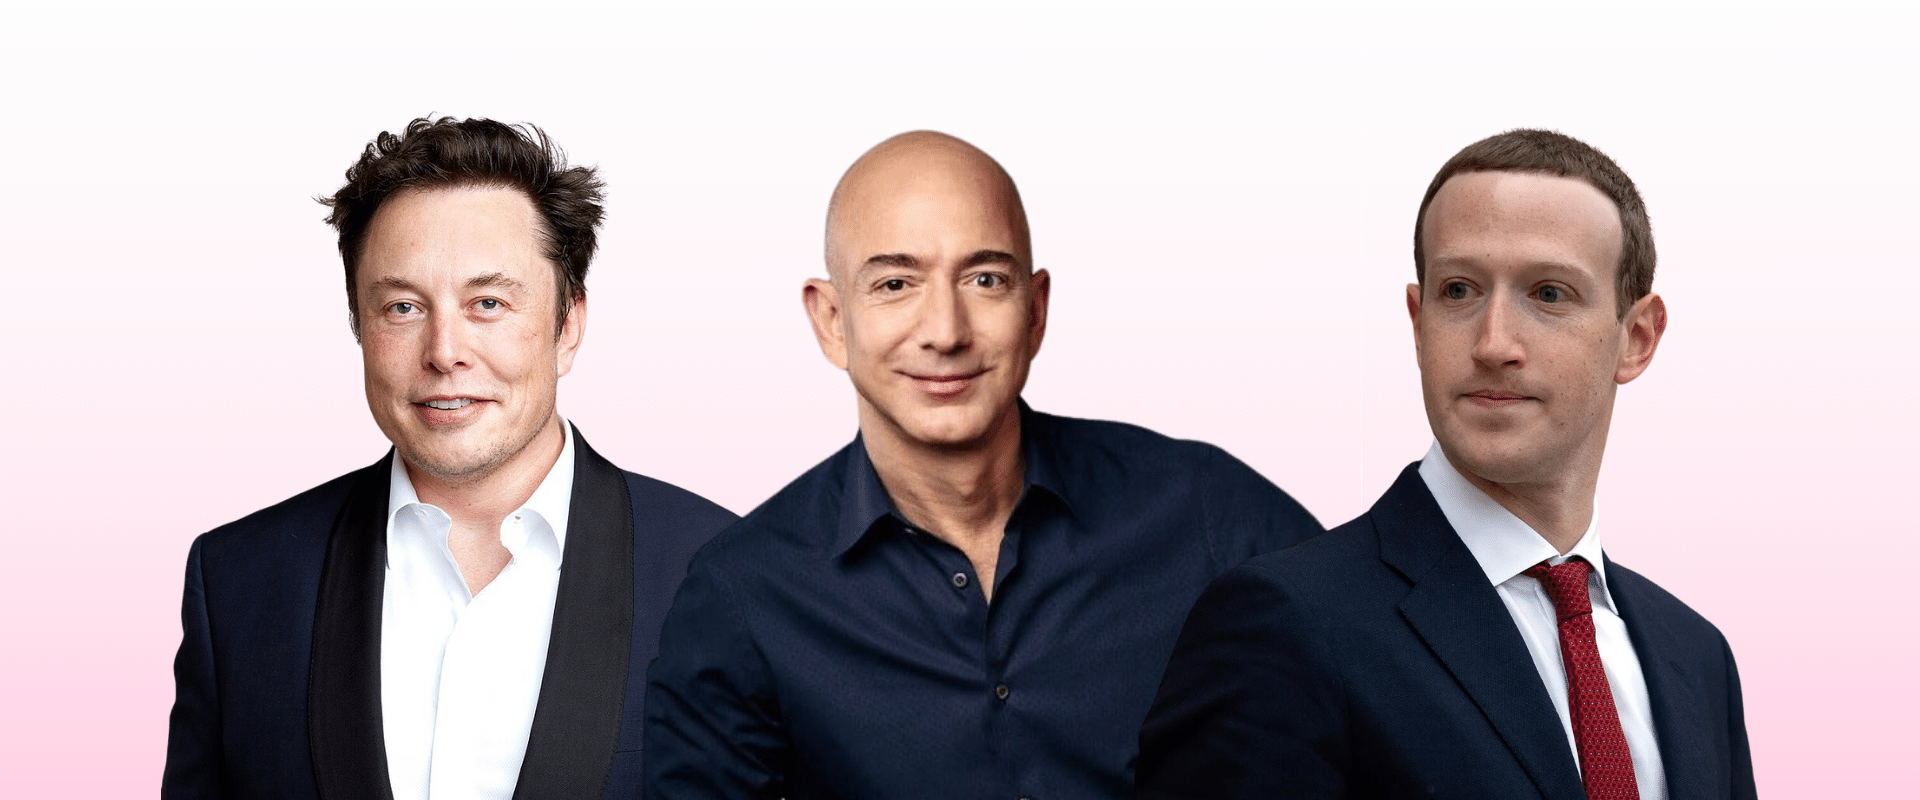 Elon musk, jeff bezos, and mark zuckerberg.